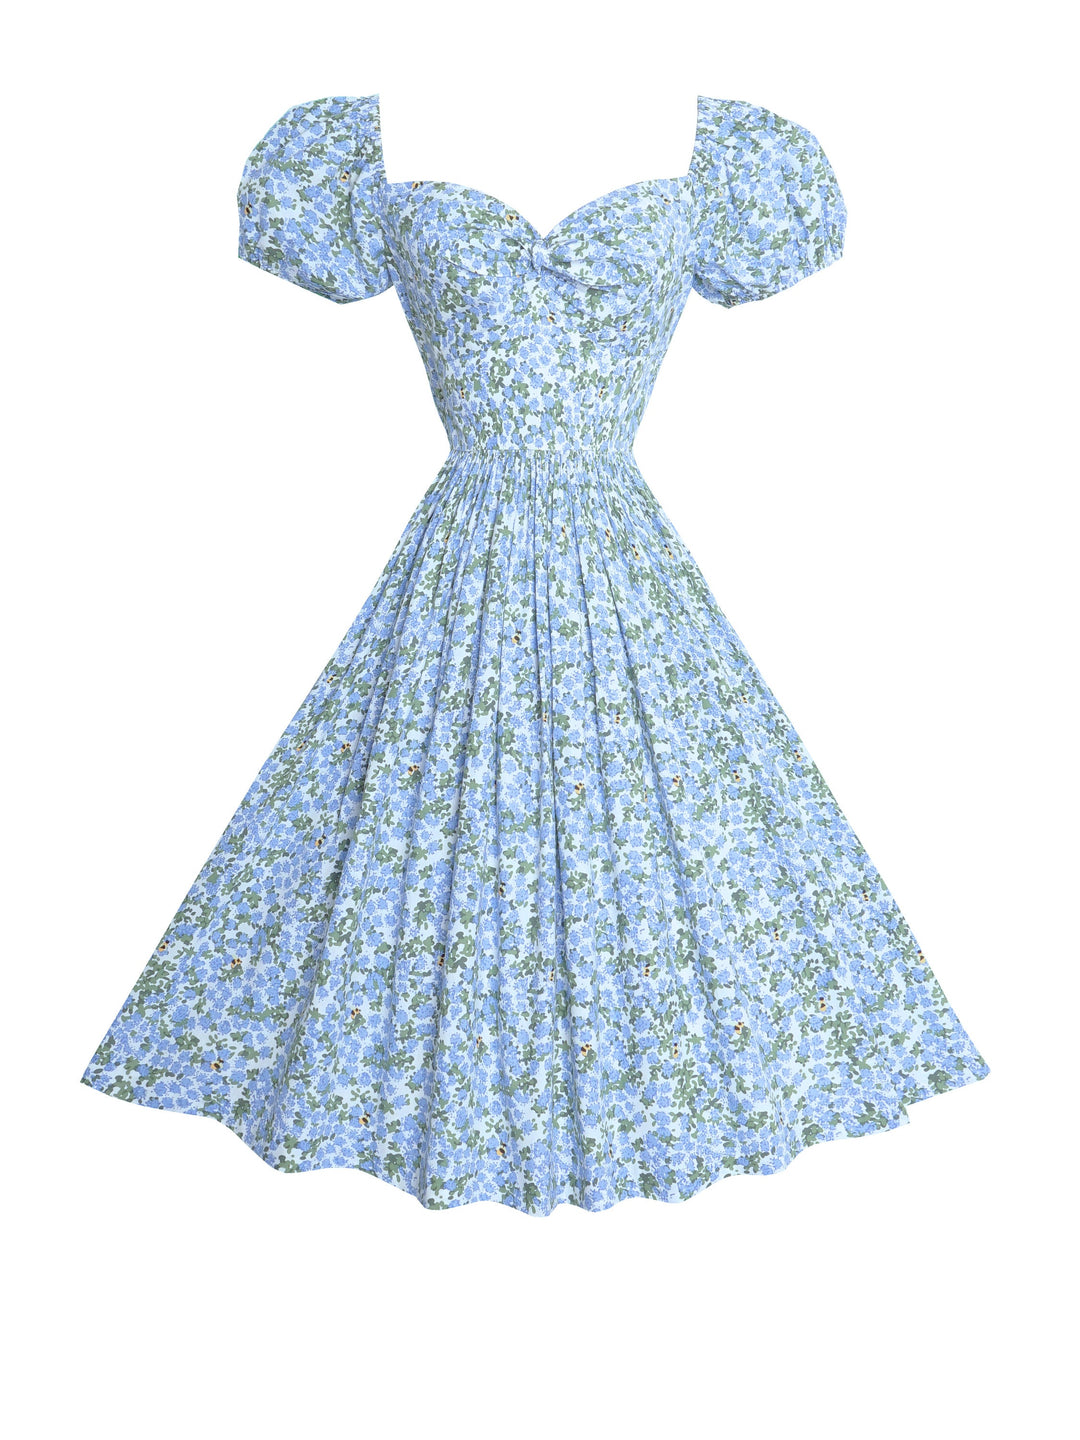 MTO - Dottie Dress in "Beeloved Blooms"